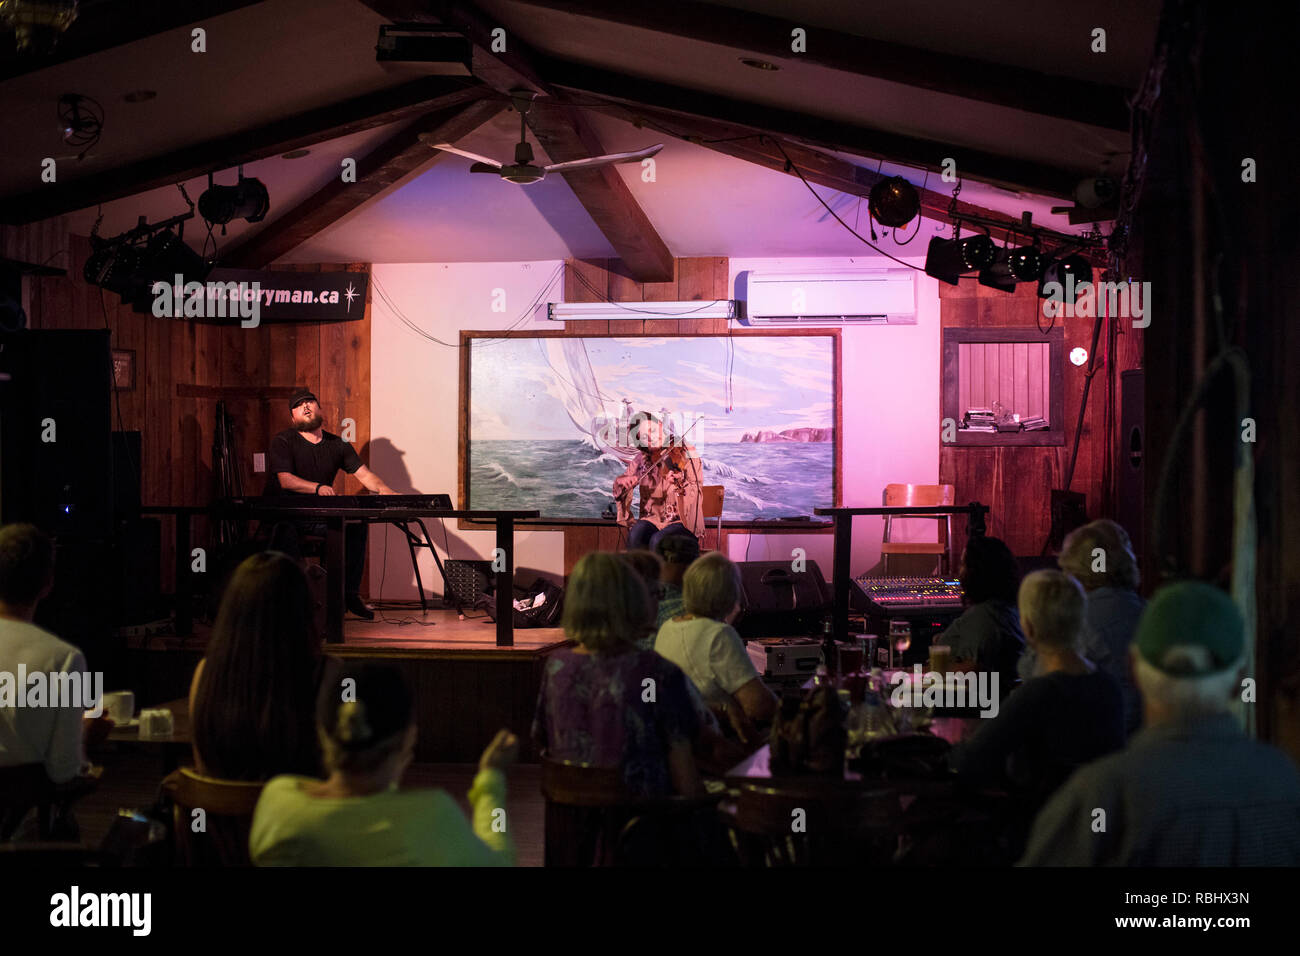 CHETICAMP, CAPE BRETON, NOVA SCOTIA, CANADA - July 17, 2018: Chrissy Crowley (C), and Jason Roach (L), perform traditional Cape Breton fiddle music. Stock Photo